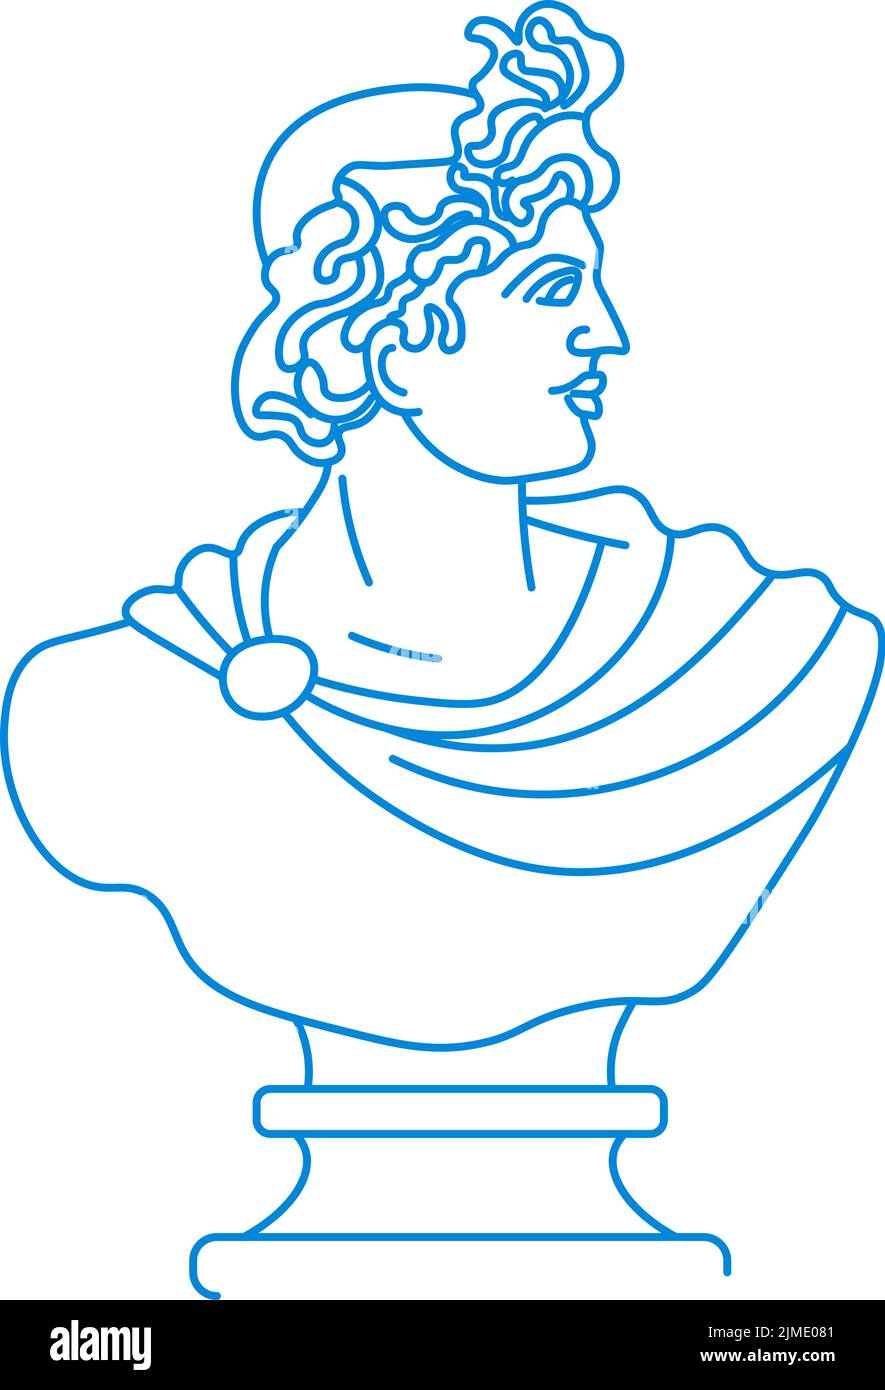 Bust of man, Greek or Roman sculpture culture Stock Vector